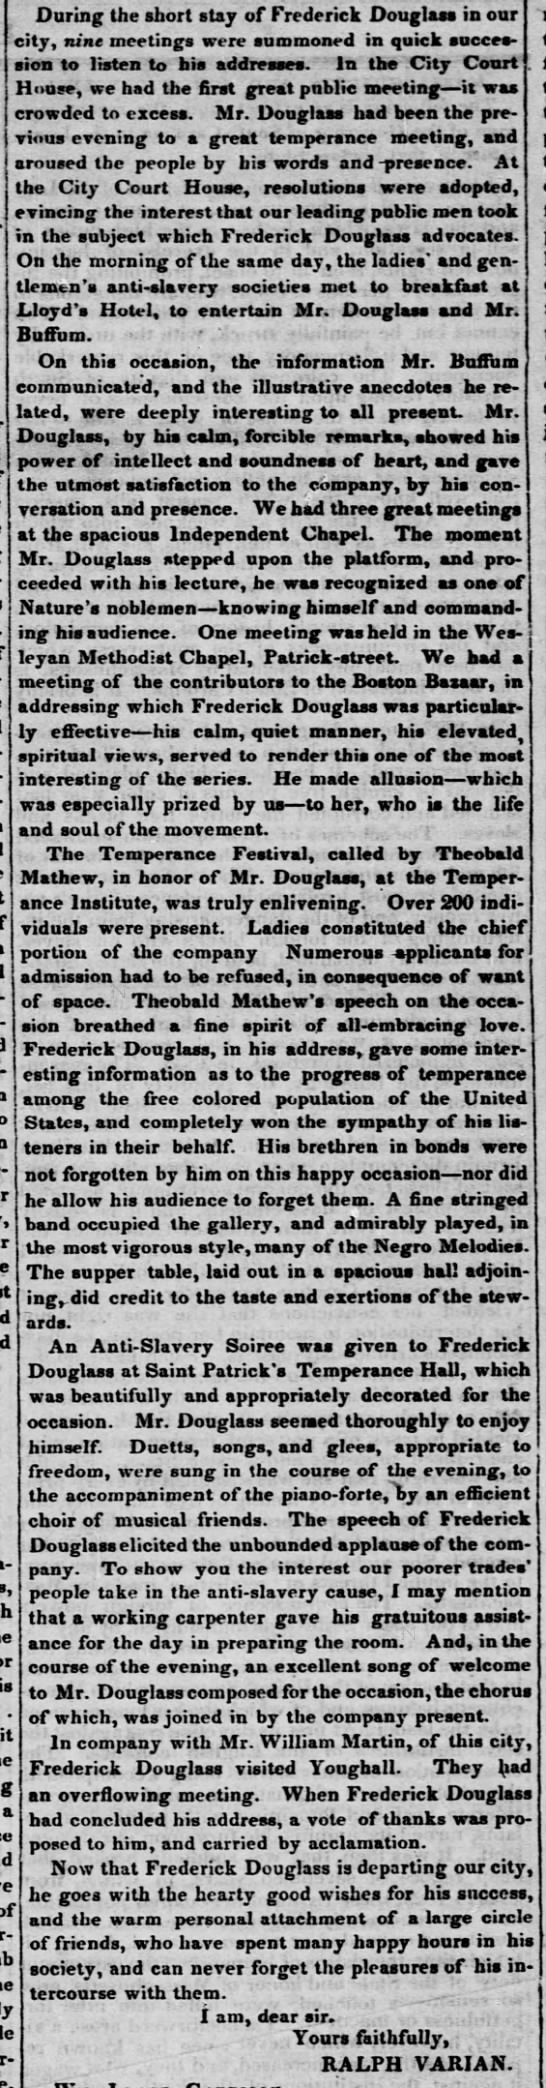 Excerpt from a 1845 letter describing Frederick Douglass' visit to Cork, Ireland - 